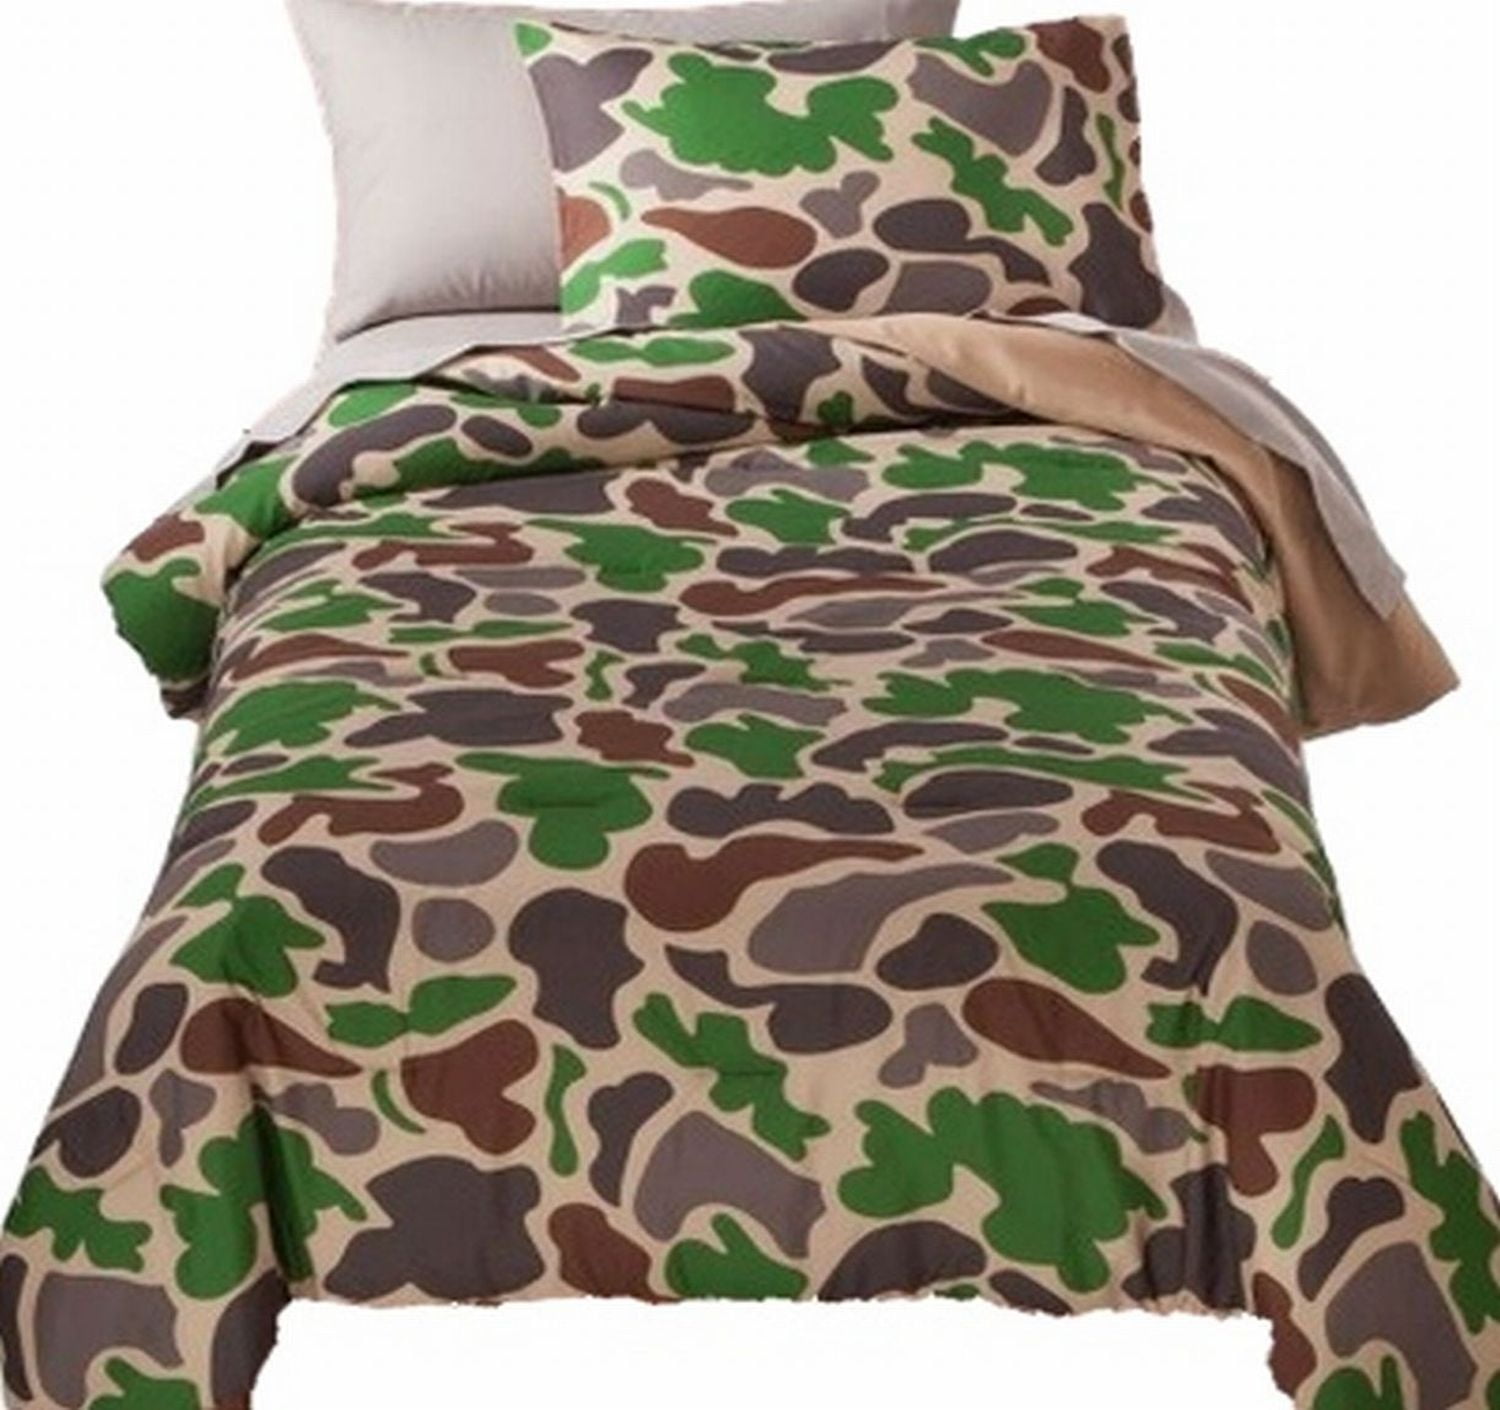 Circo Dino Basic,Sport Zone,Truck Camouflage Twin Comforter & Sheet Set 5Pieces 